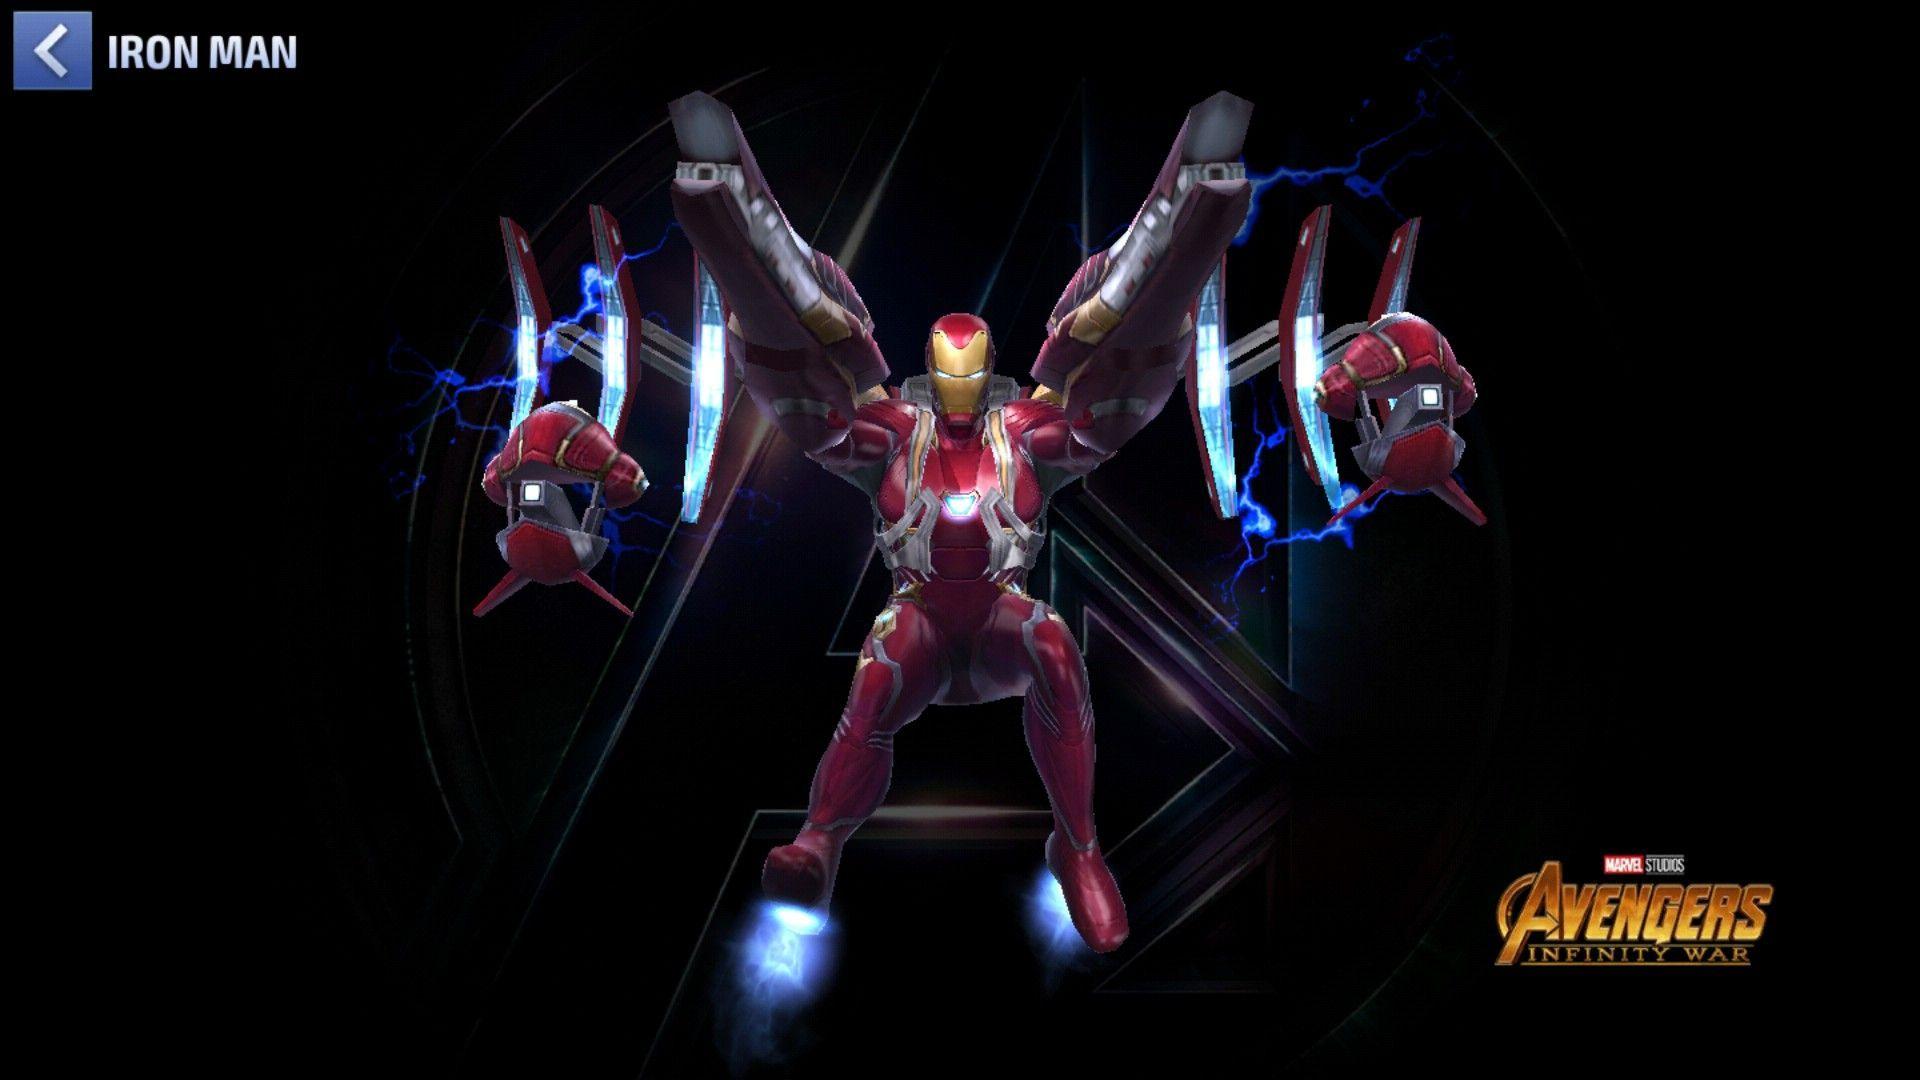 Avengers Infinity War Iron Man Bleeding Edge Armor. Iron Man